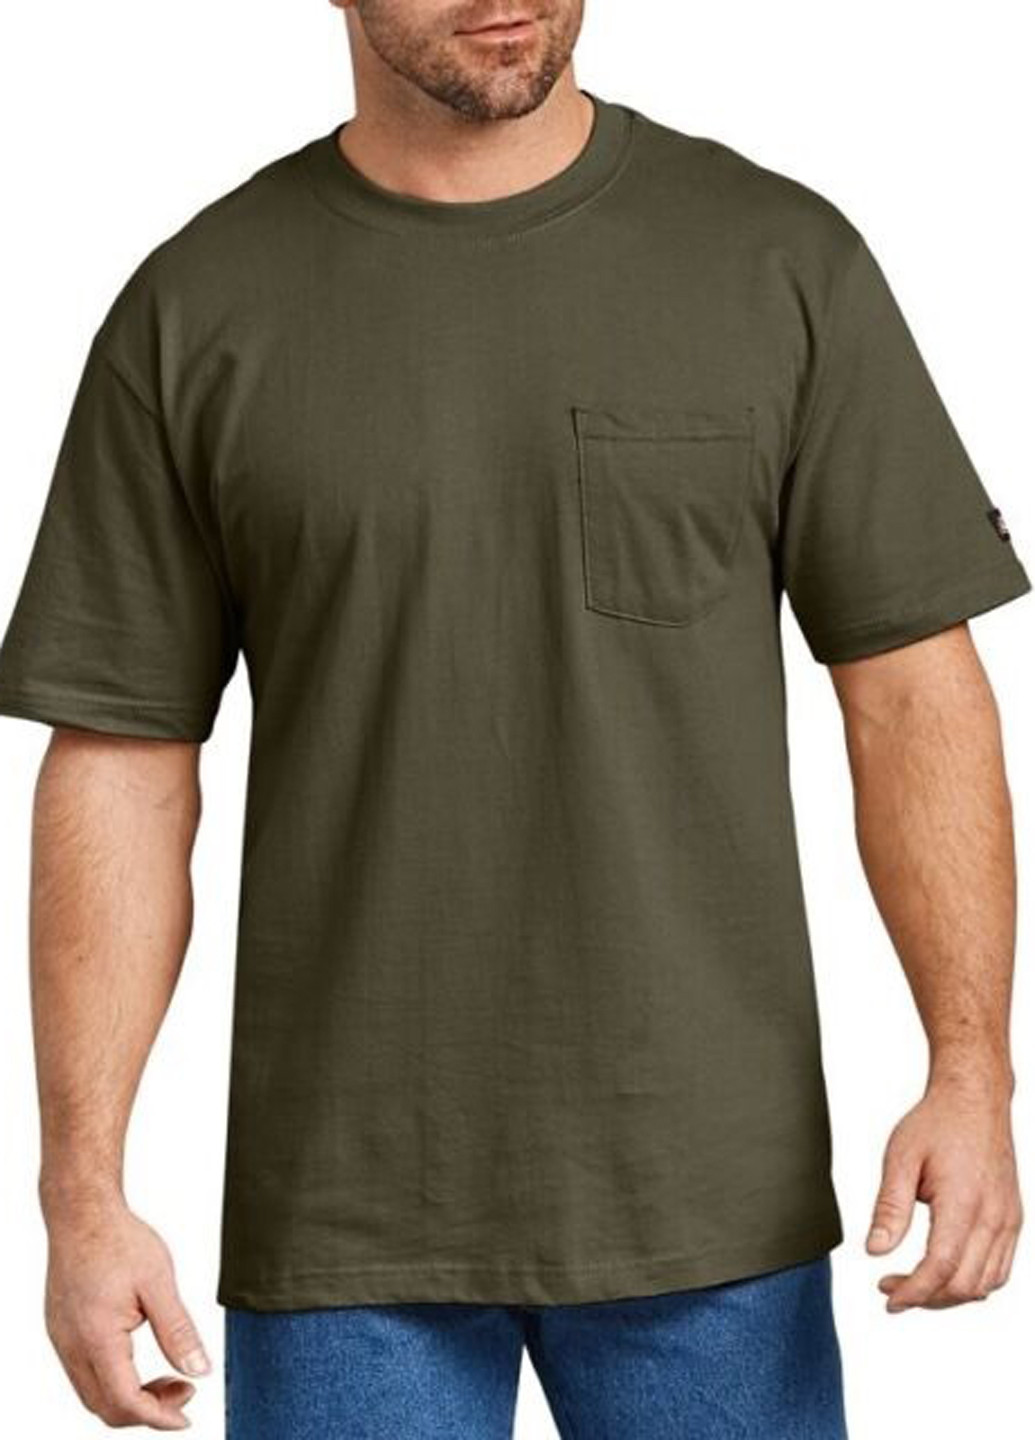 Хаки (оливковая) футболка Dickies